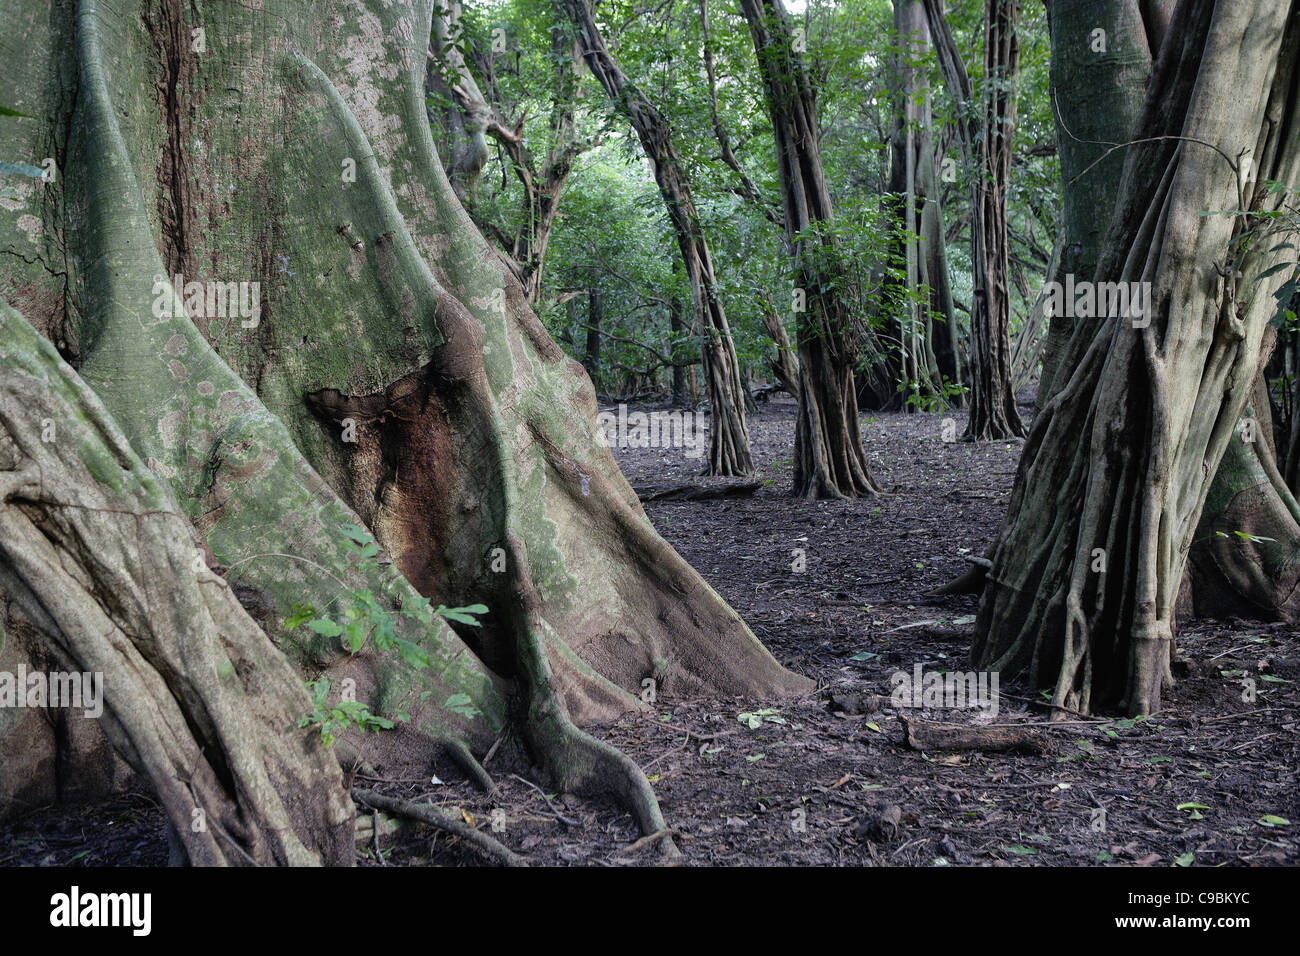 Africa, Guinea Bissau, Bissagas Islands, Caravel island with ceiba trees at national park orango grande Stock Photo